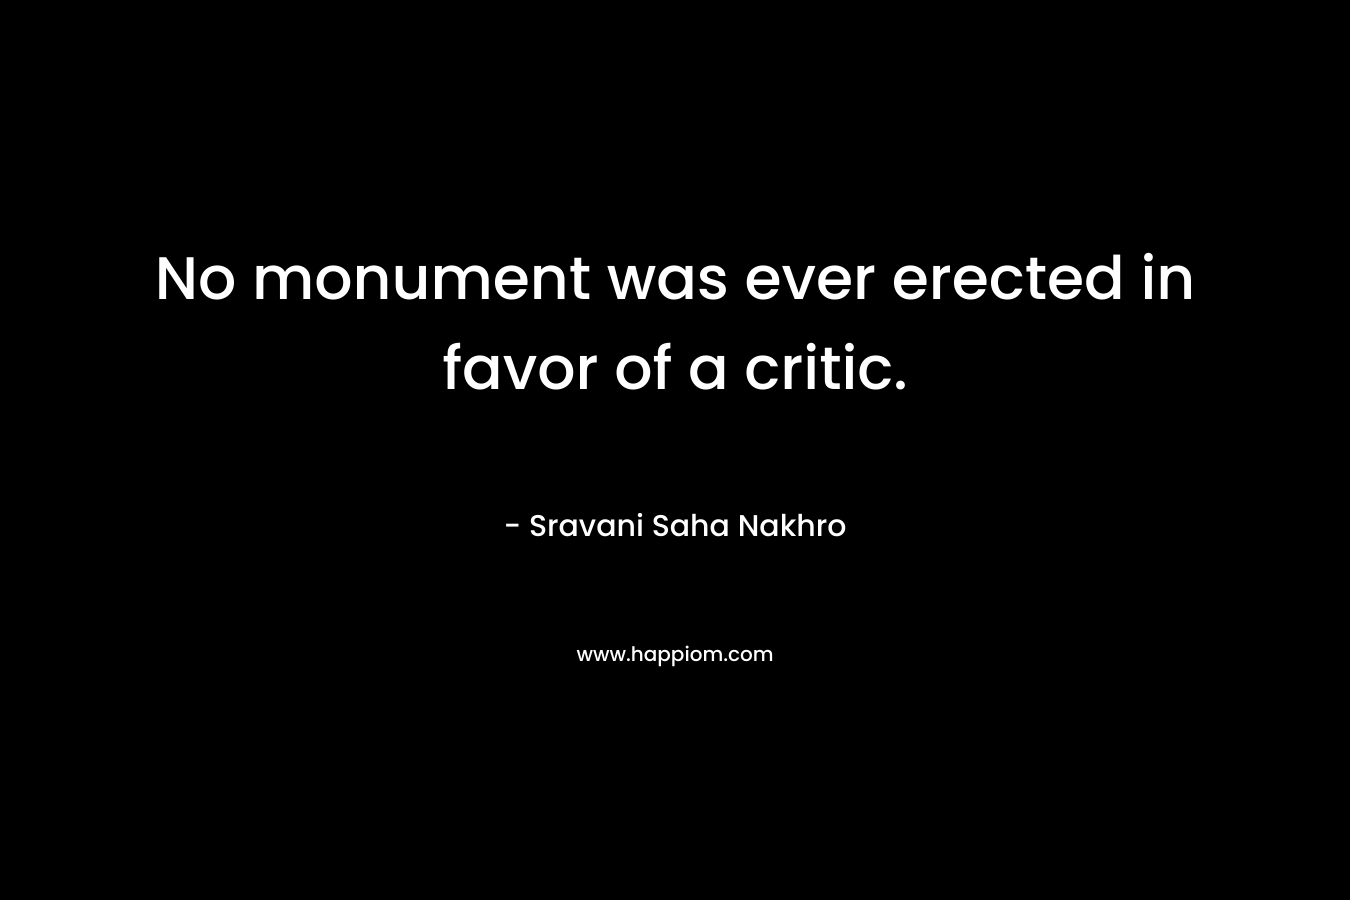 No monument was ever erected in favor of a critic. – Sravani Saha Nakhro